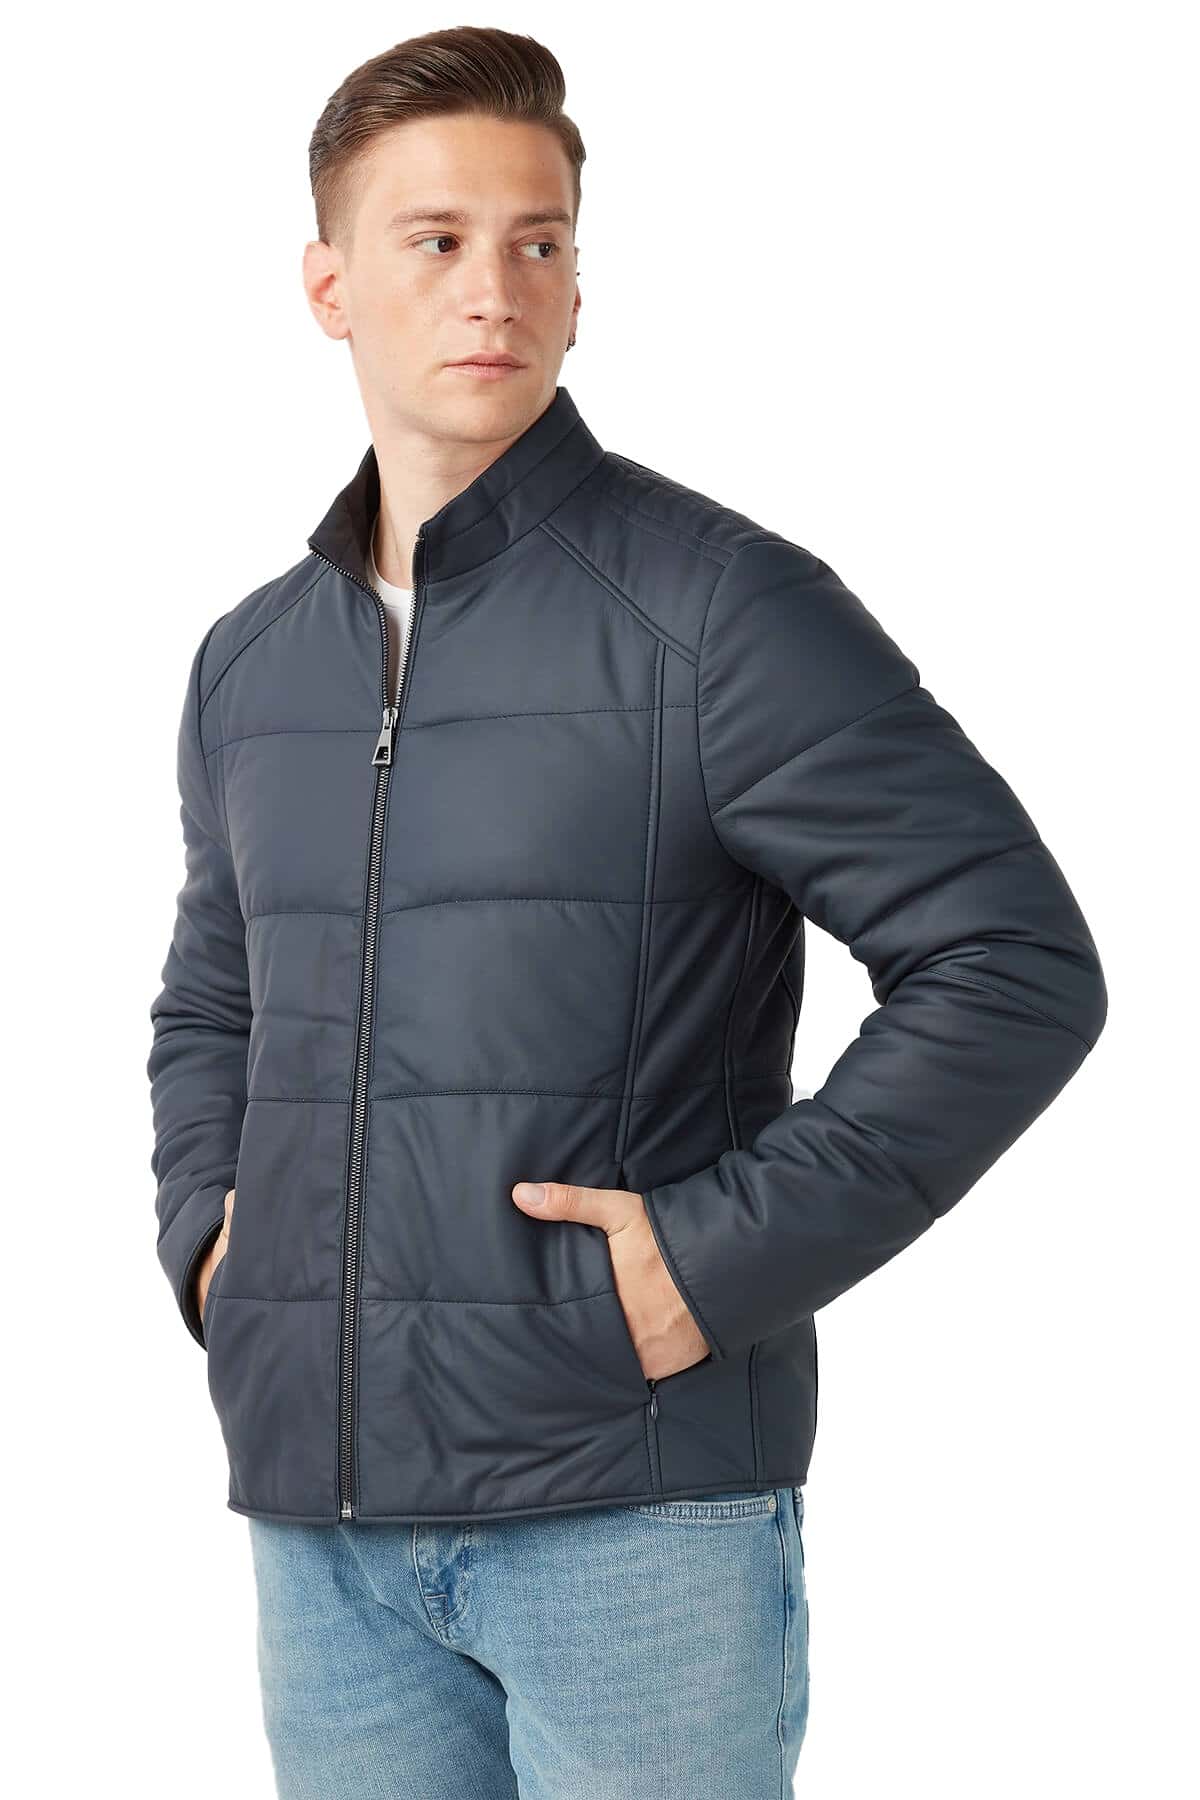 Men's 100 % Real Blue Leather Laciveft Taffeta Jacket